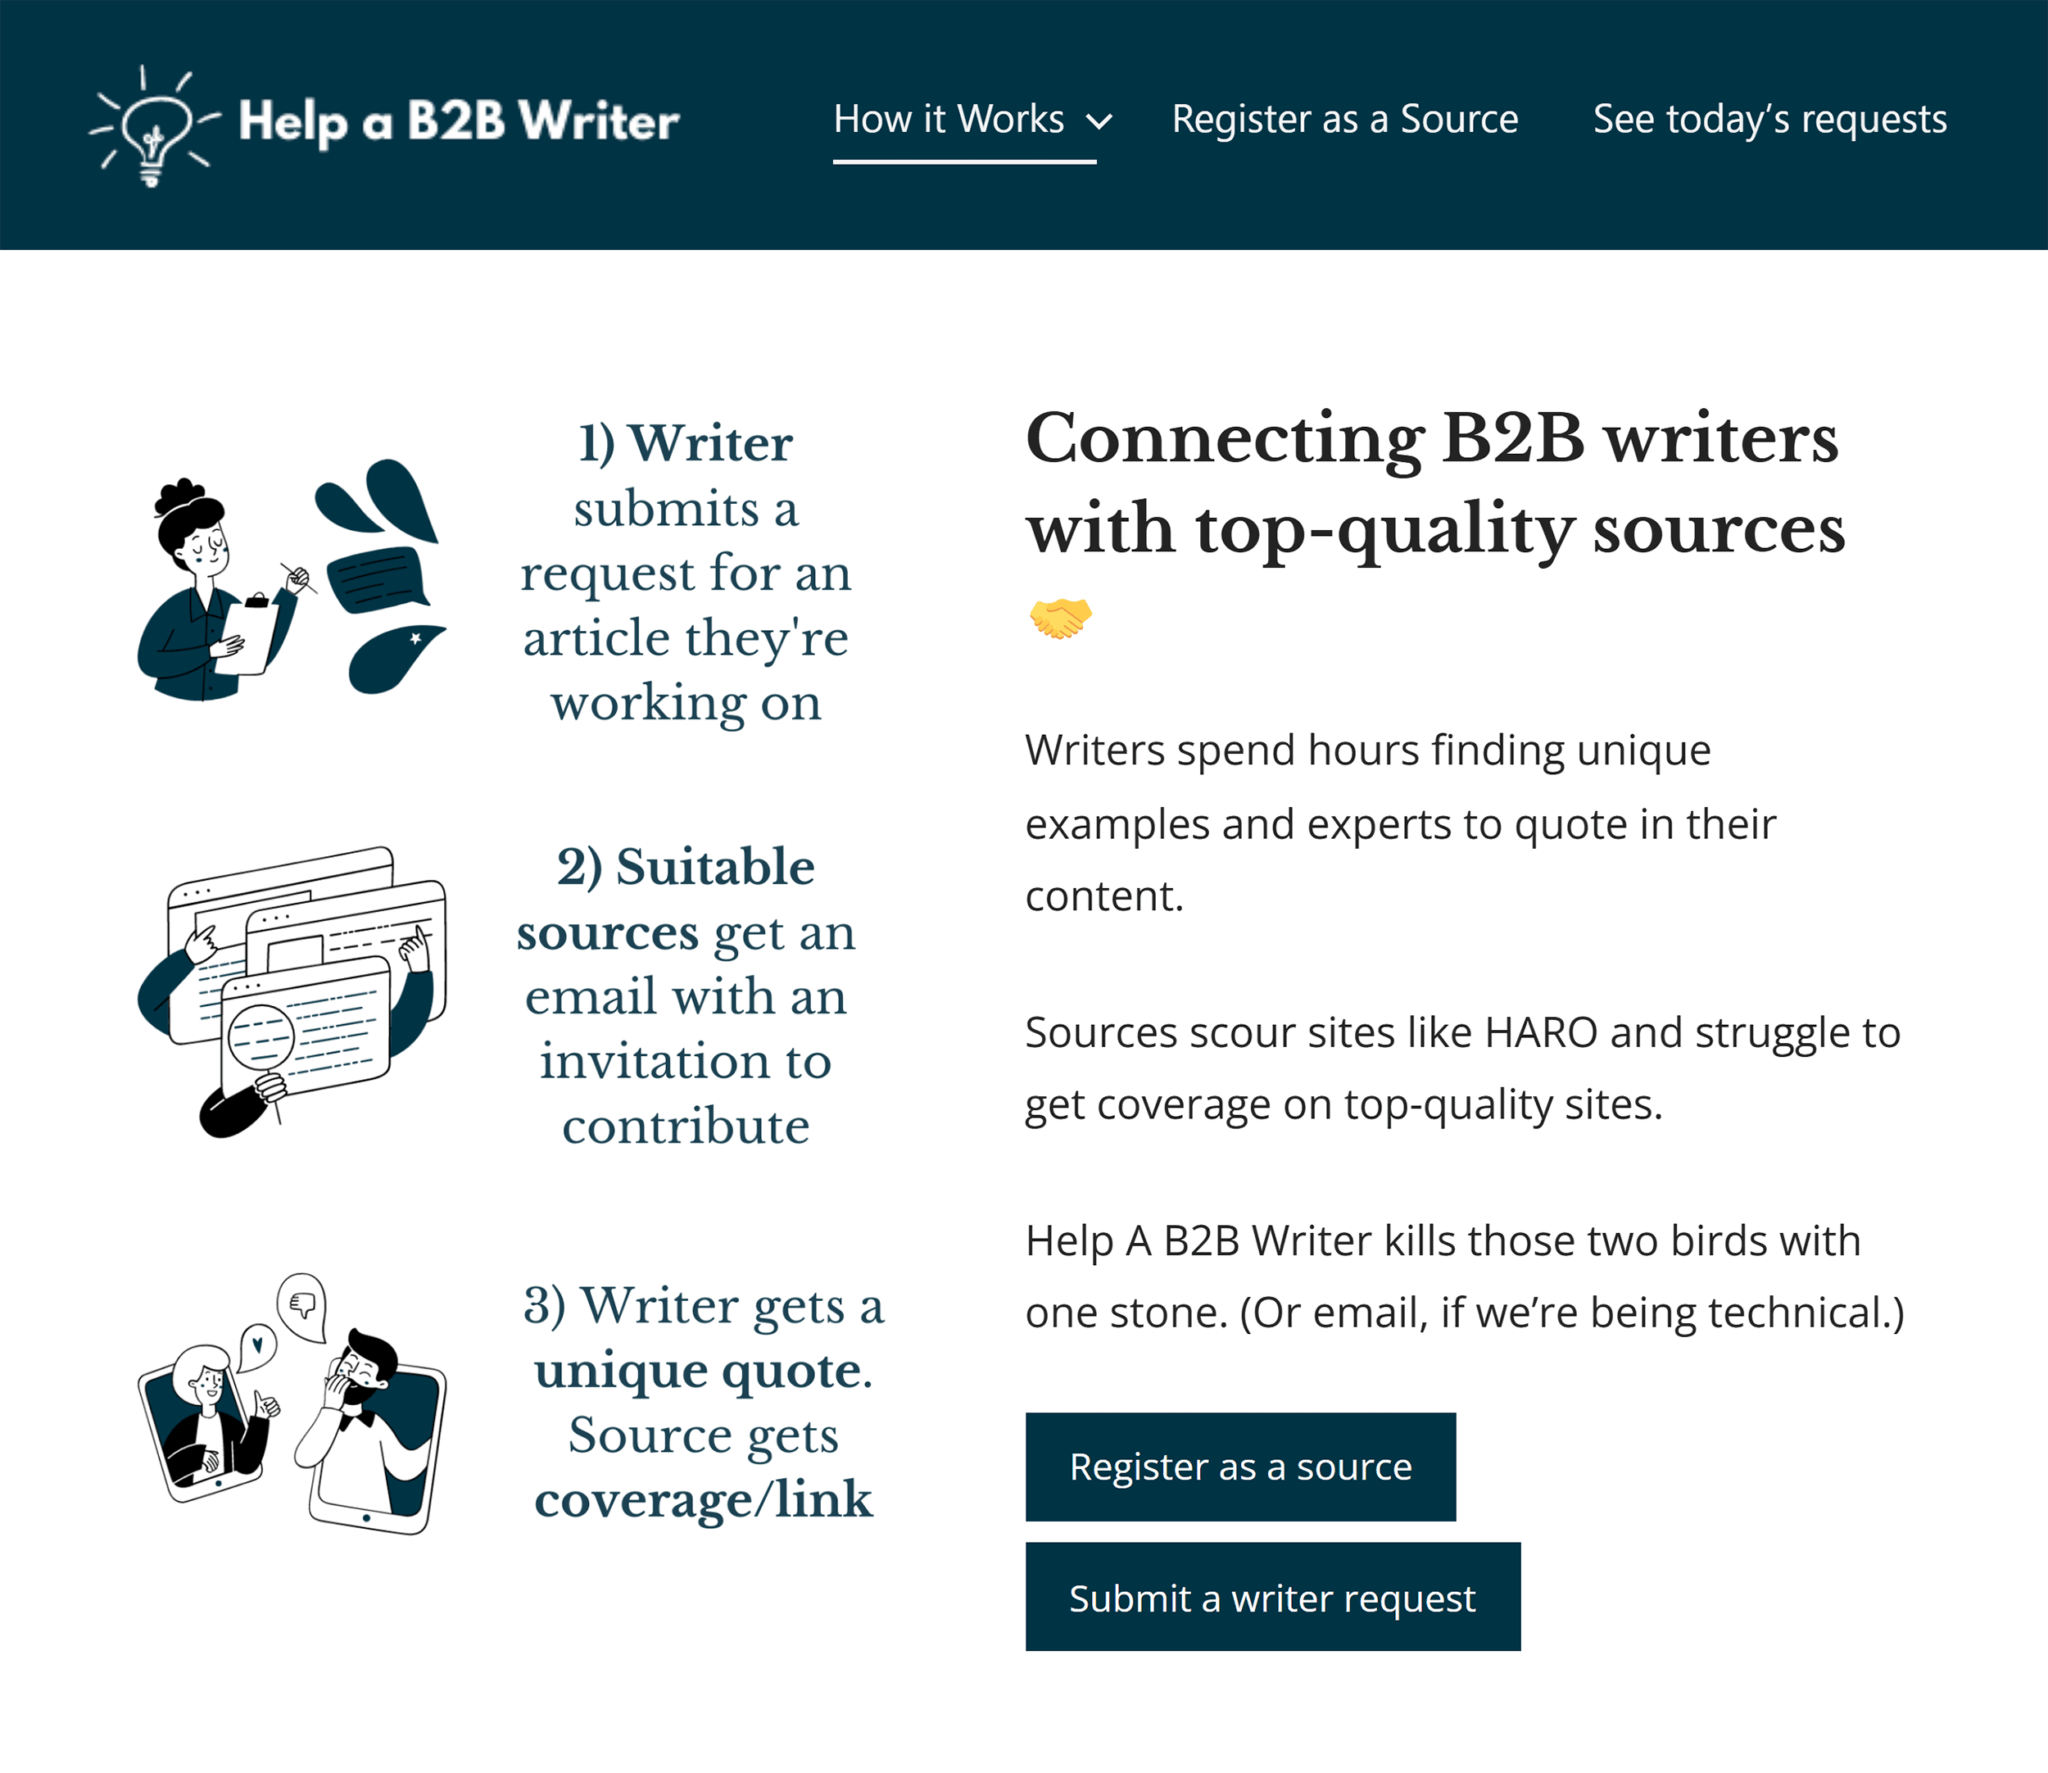 helpab2bwriter-homepage 29 Top Digital Marketing Tools for Every Budget